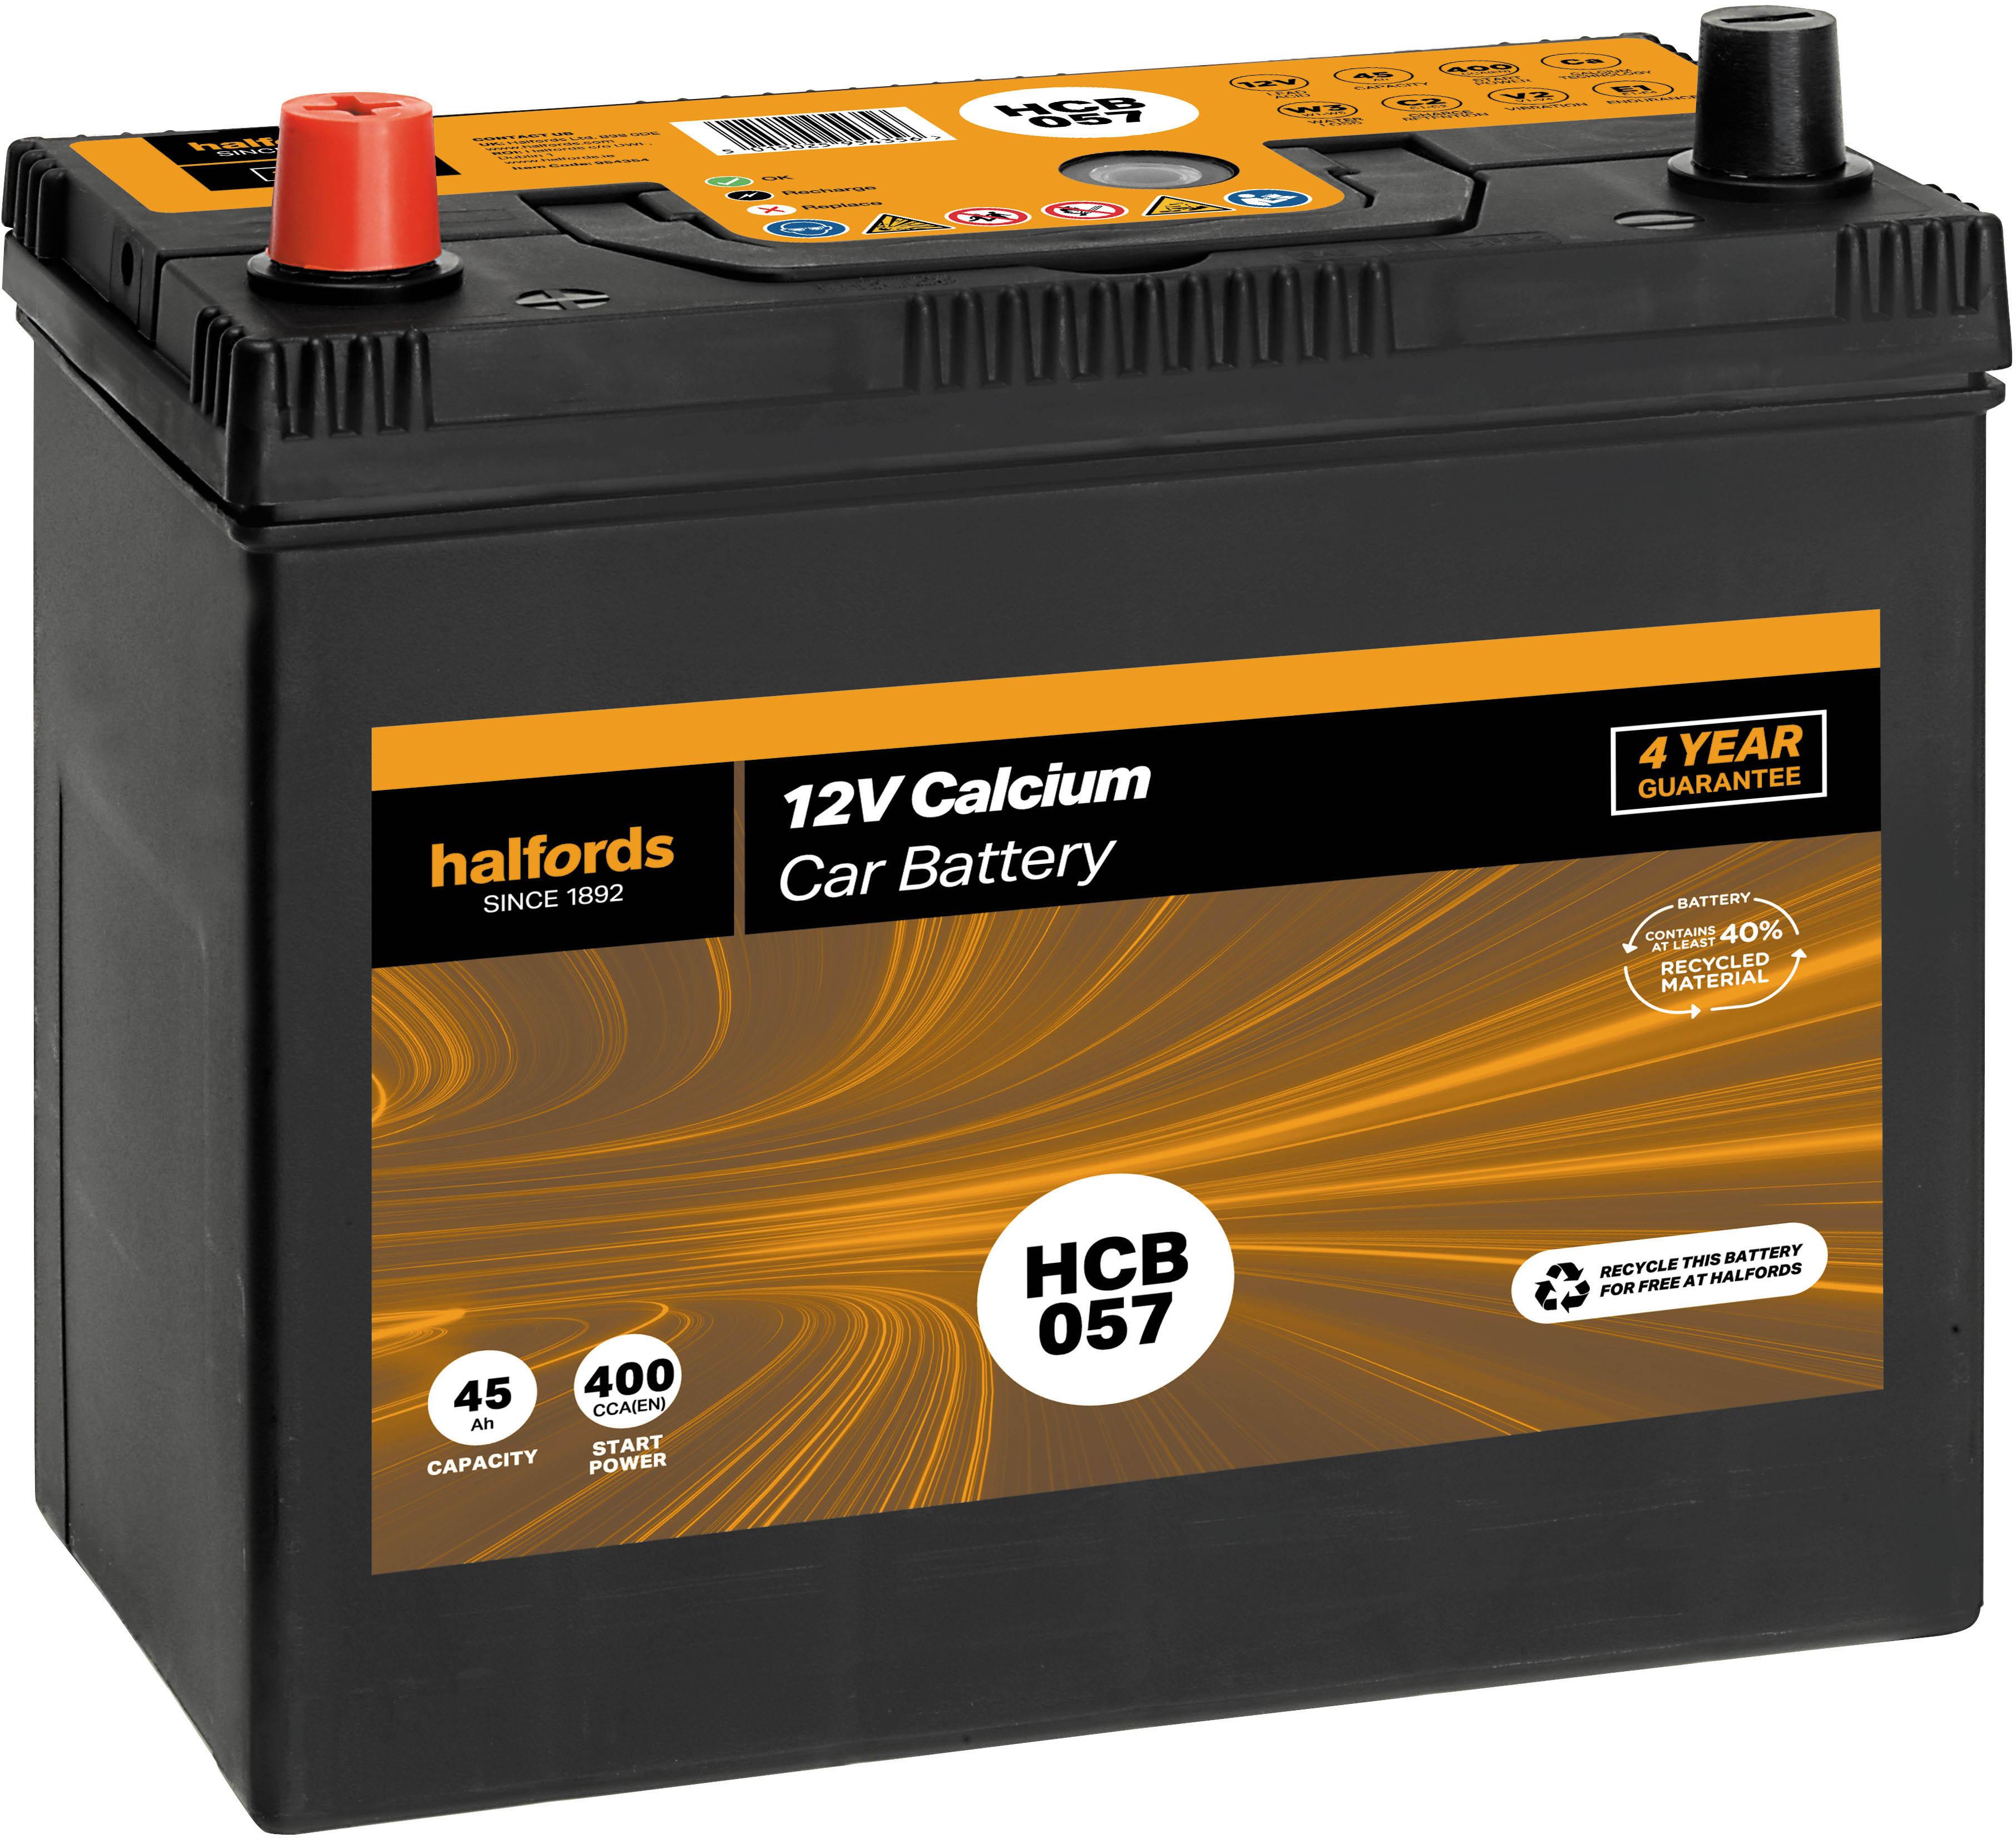 Halfords Hb057 Lead Acid 12V Car Battery 3 Year Guarantee